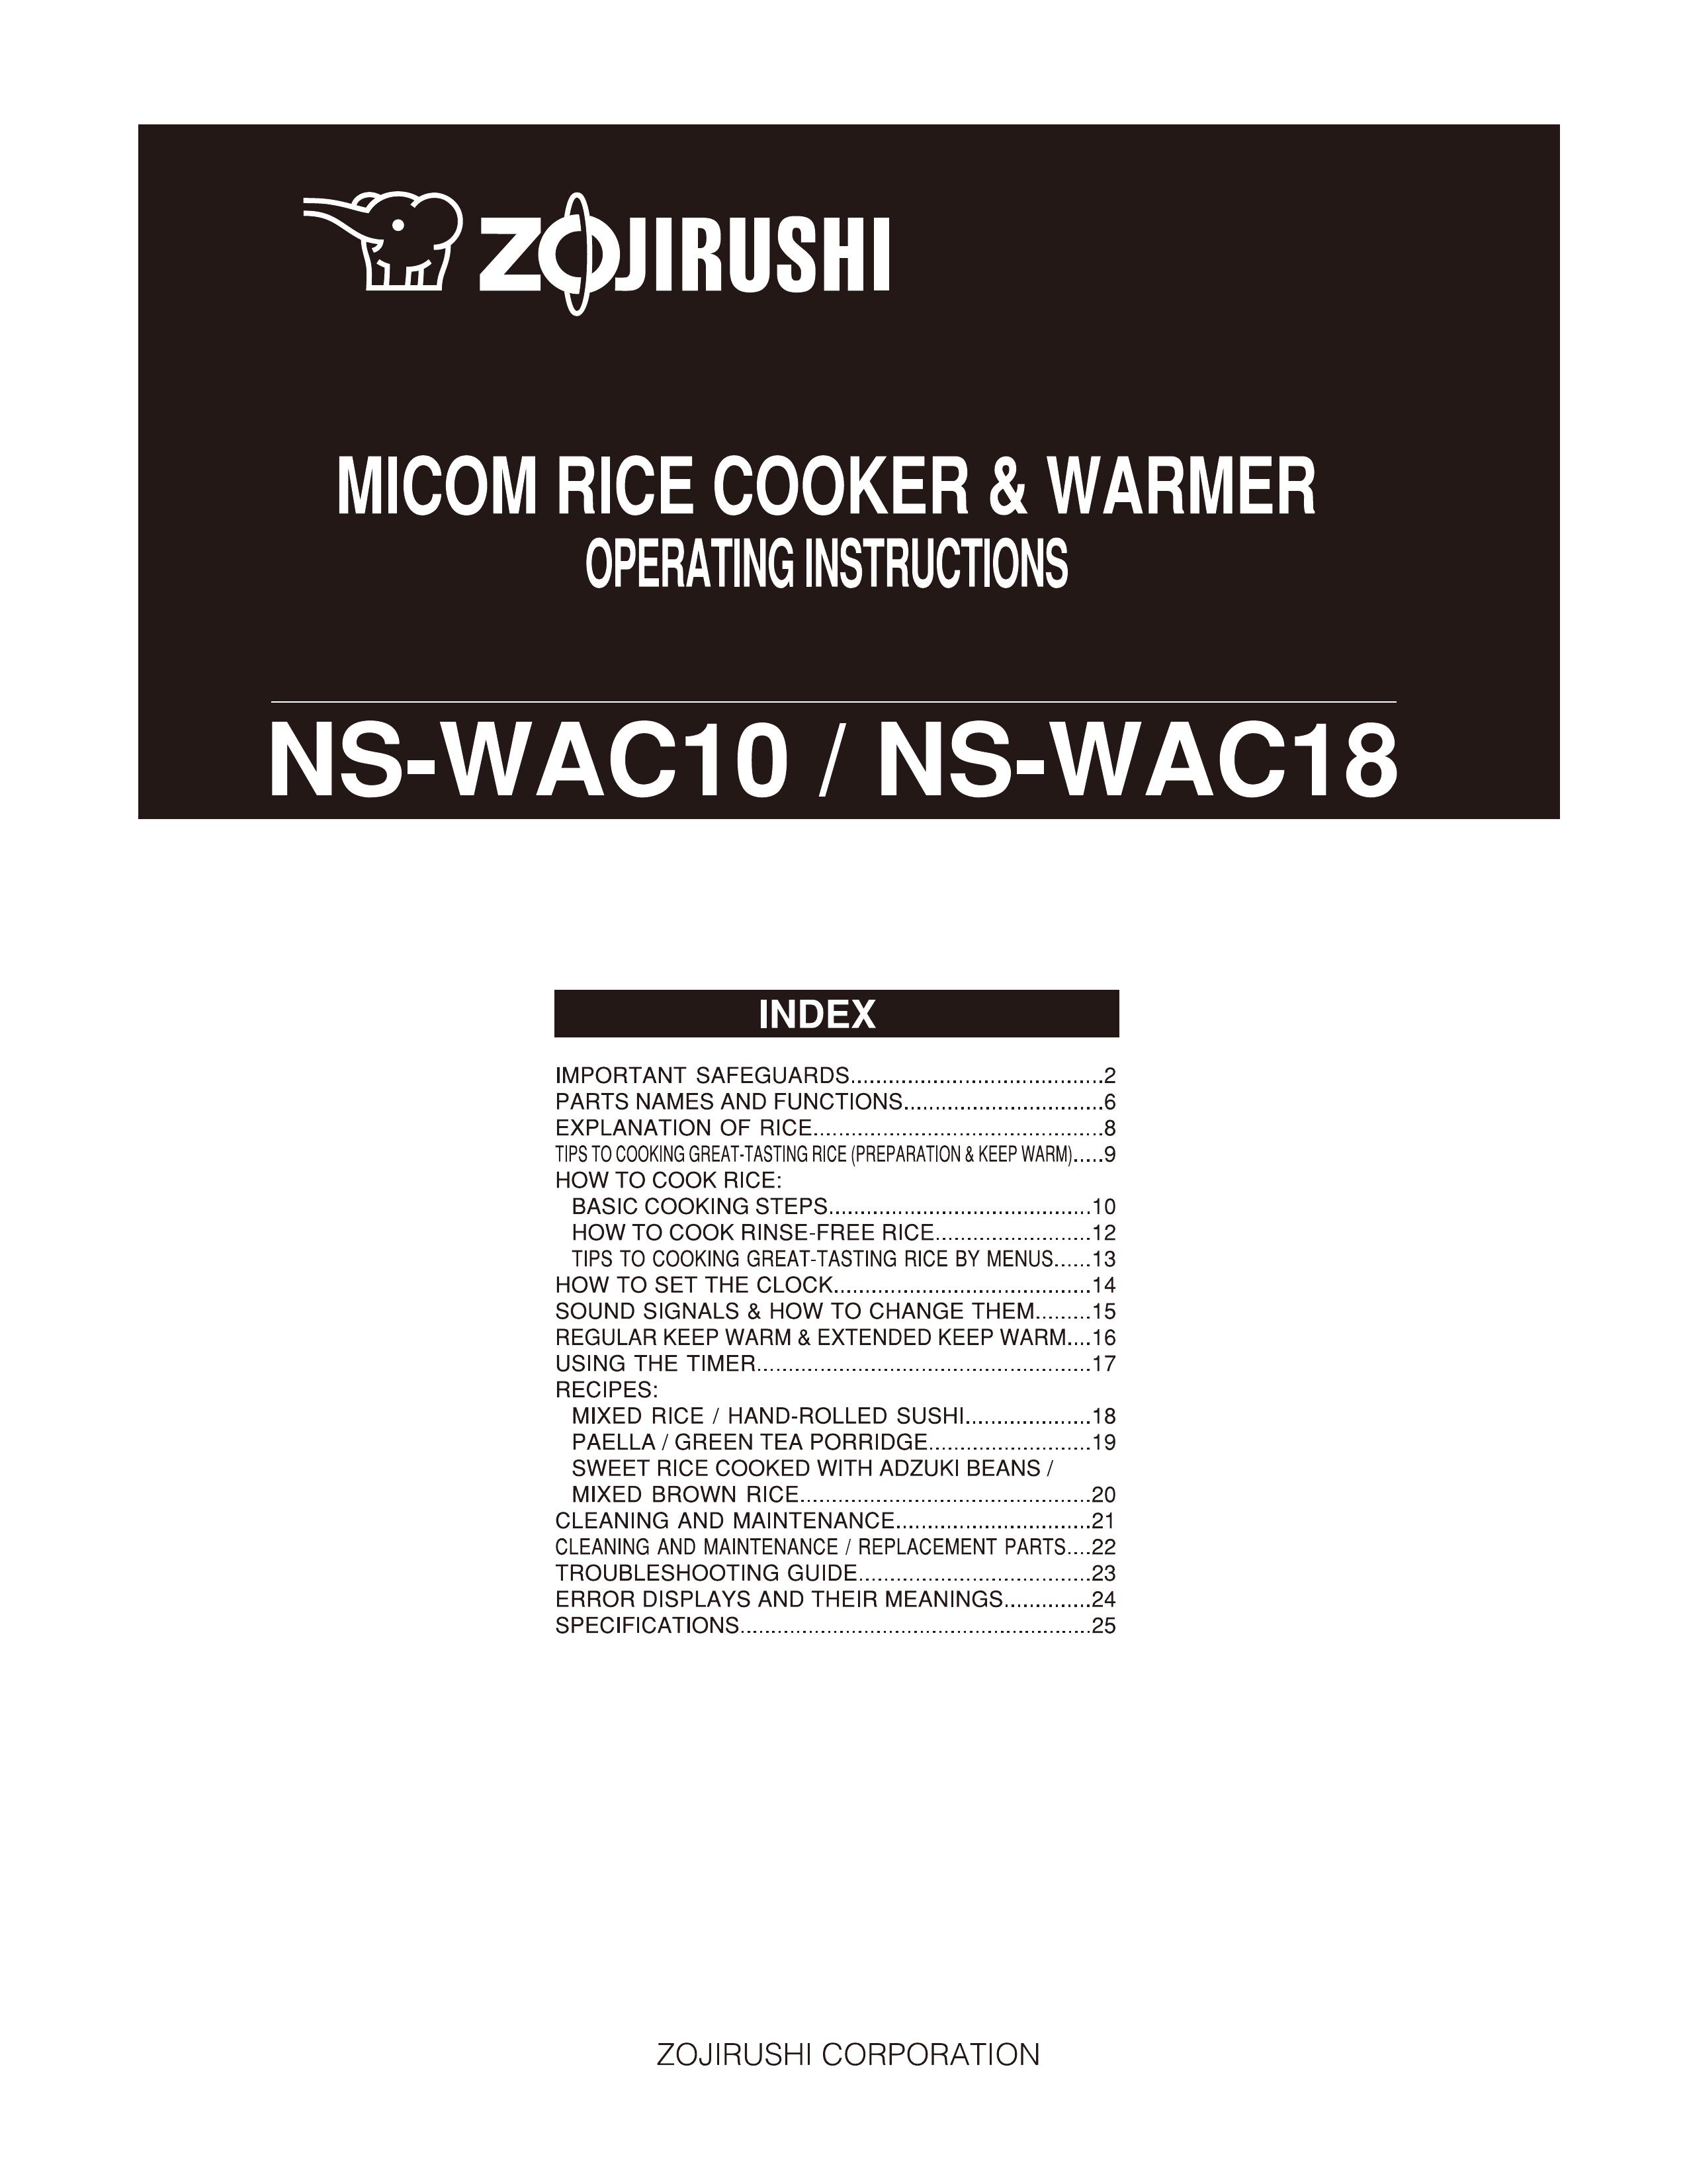 Zojirushi NS-WAC18 Rice Cooker User Manual